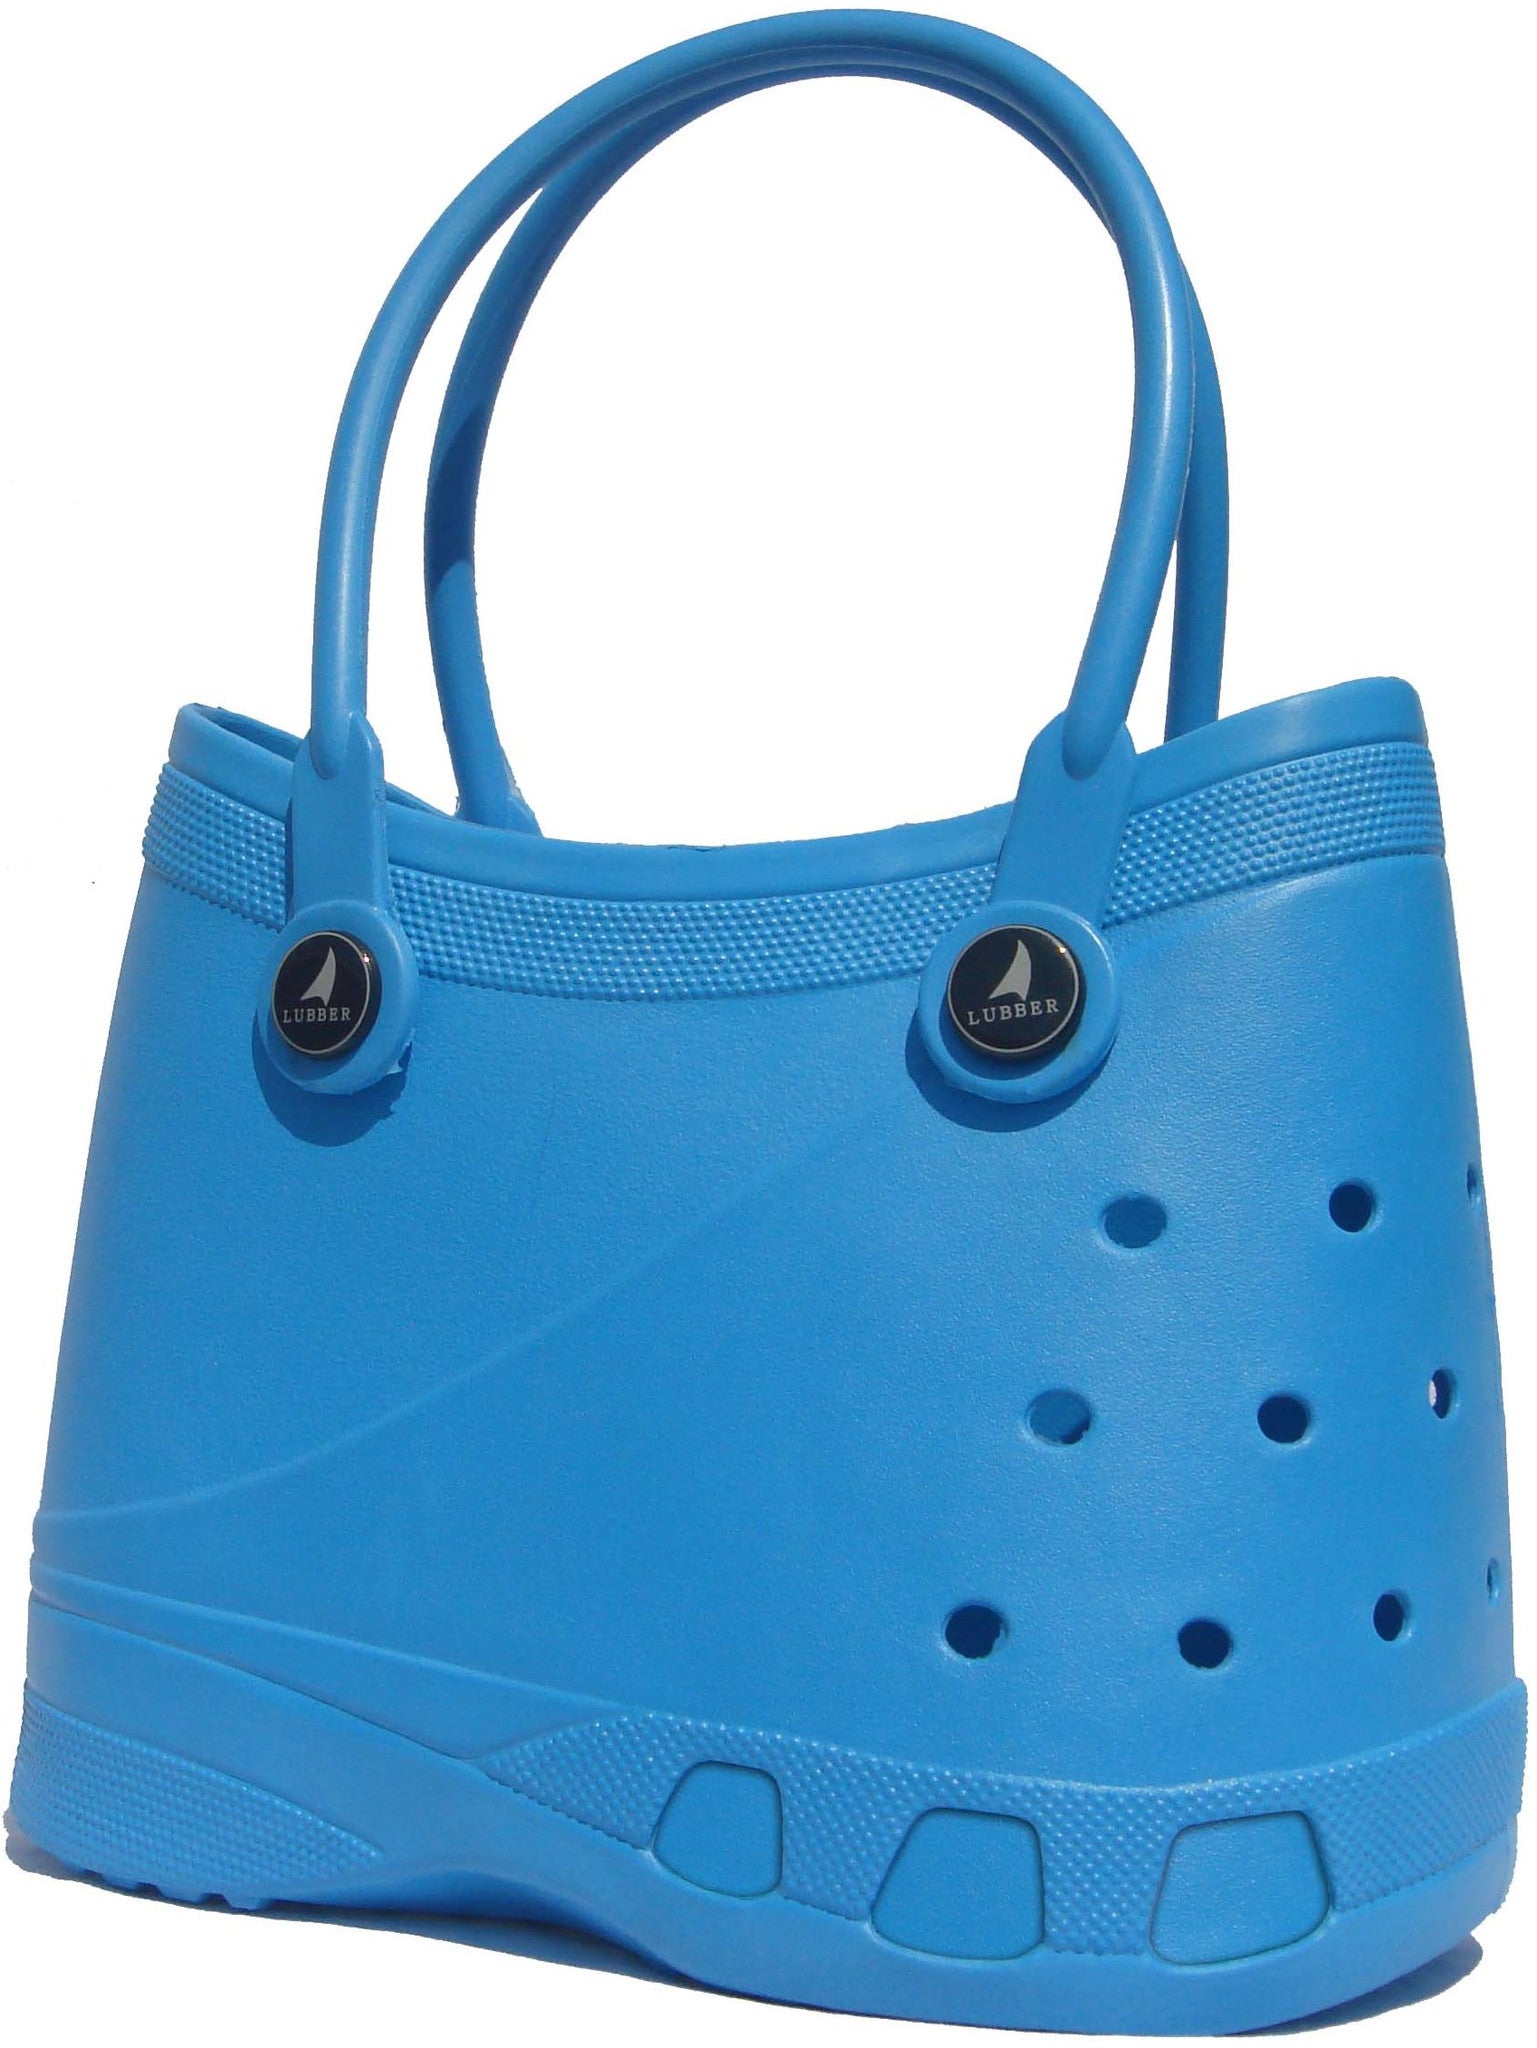 Handbags & Bags - LUBBER Tote Rubber Croc Waterproof Beach Bag (Blue ...